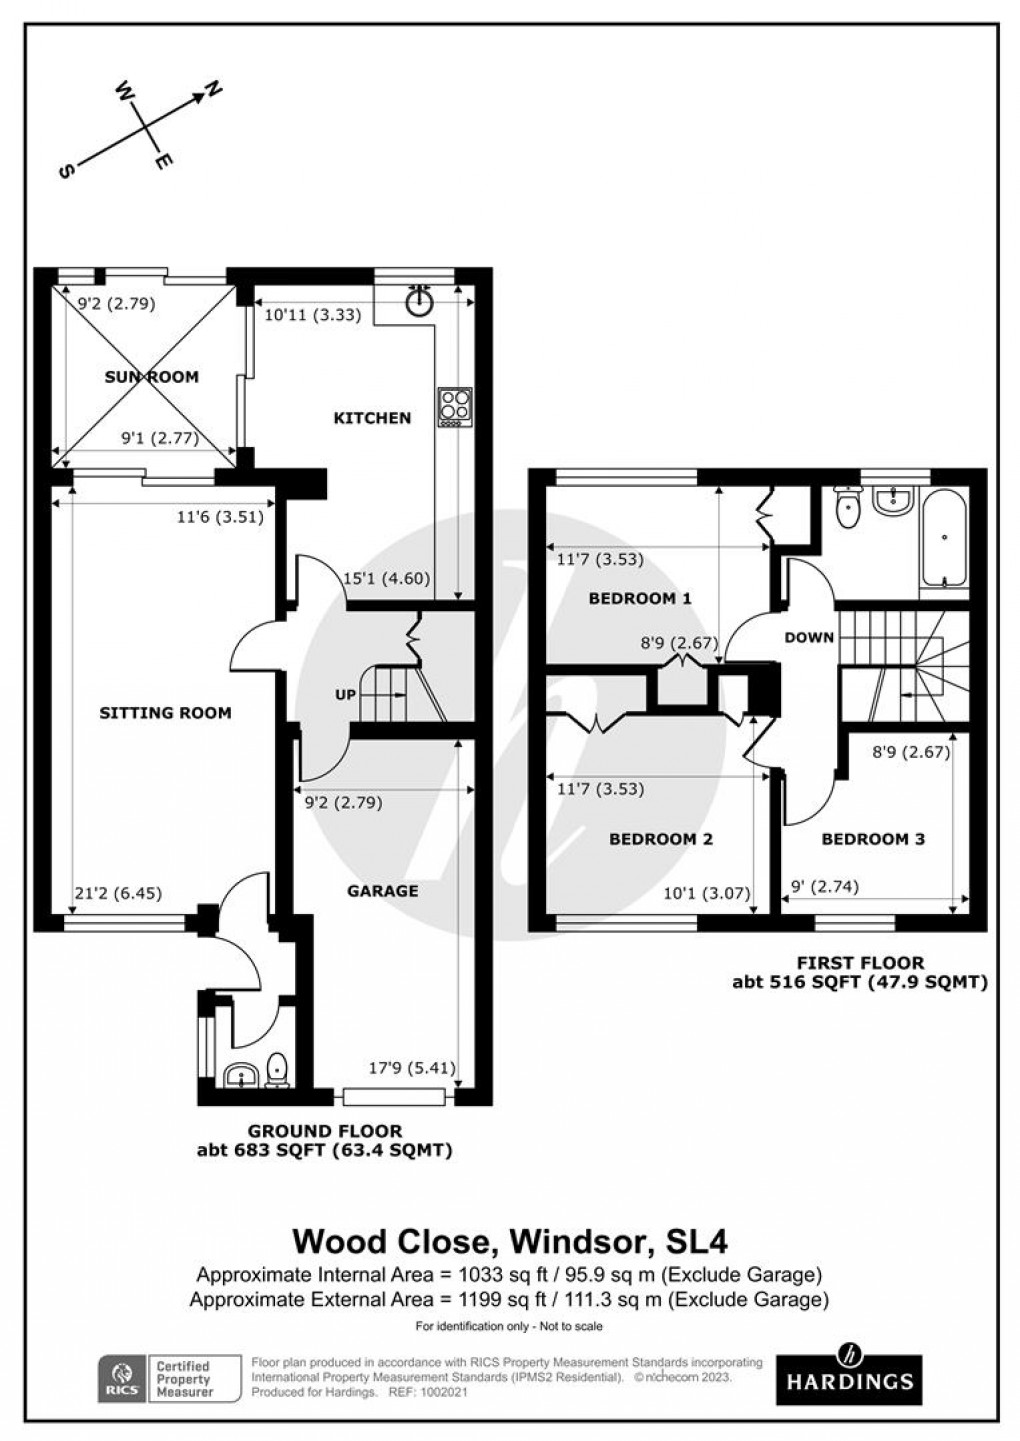 Floorplan for Wood Close, Windsor